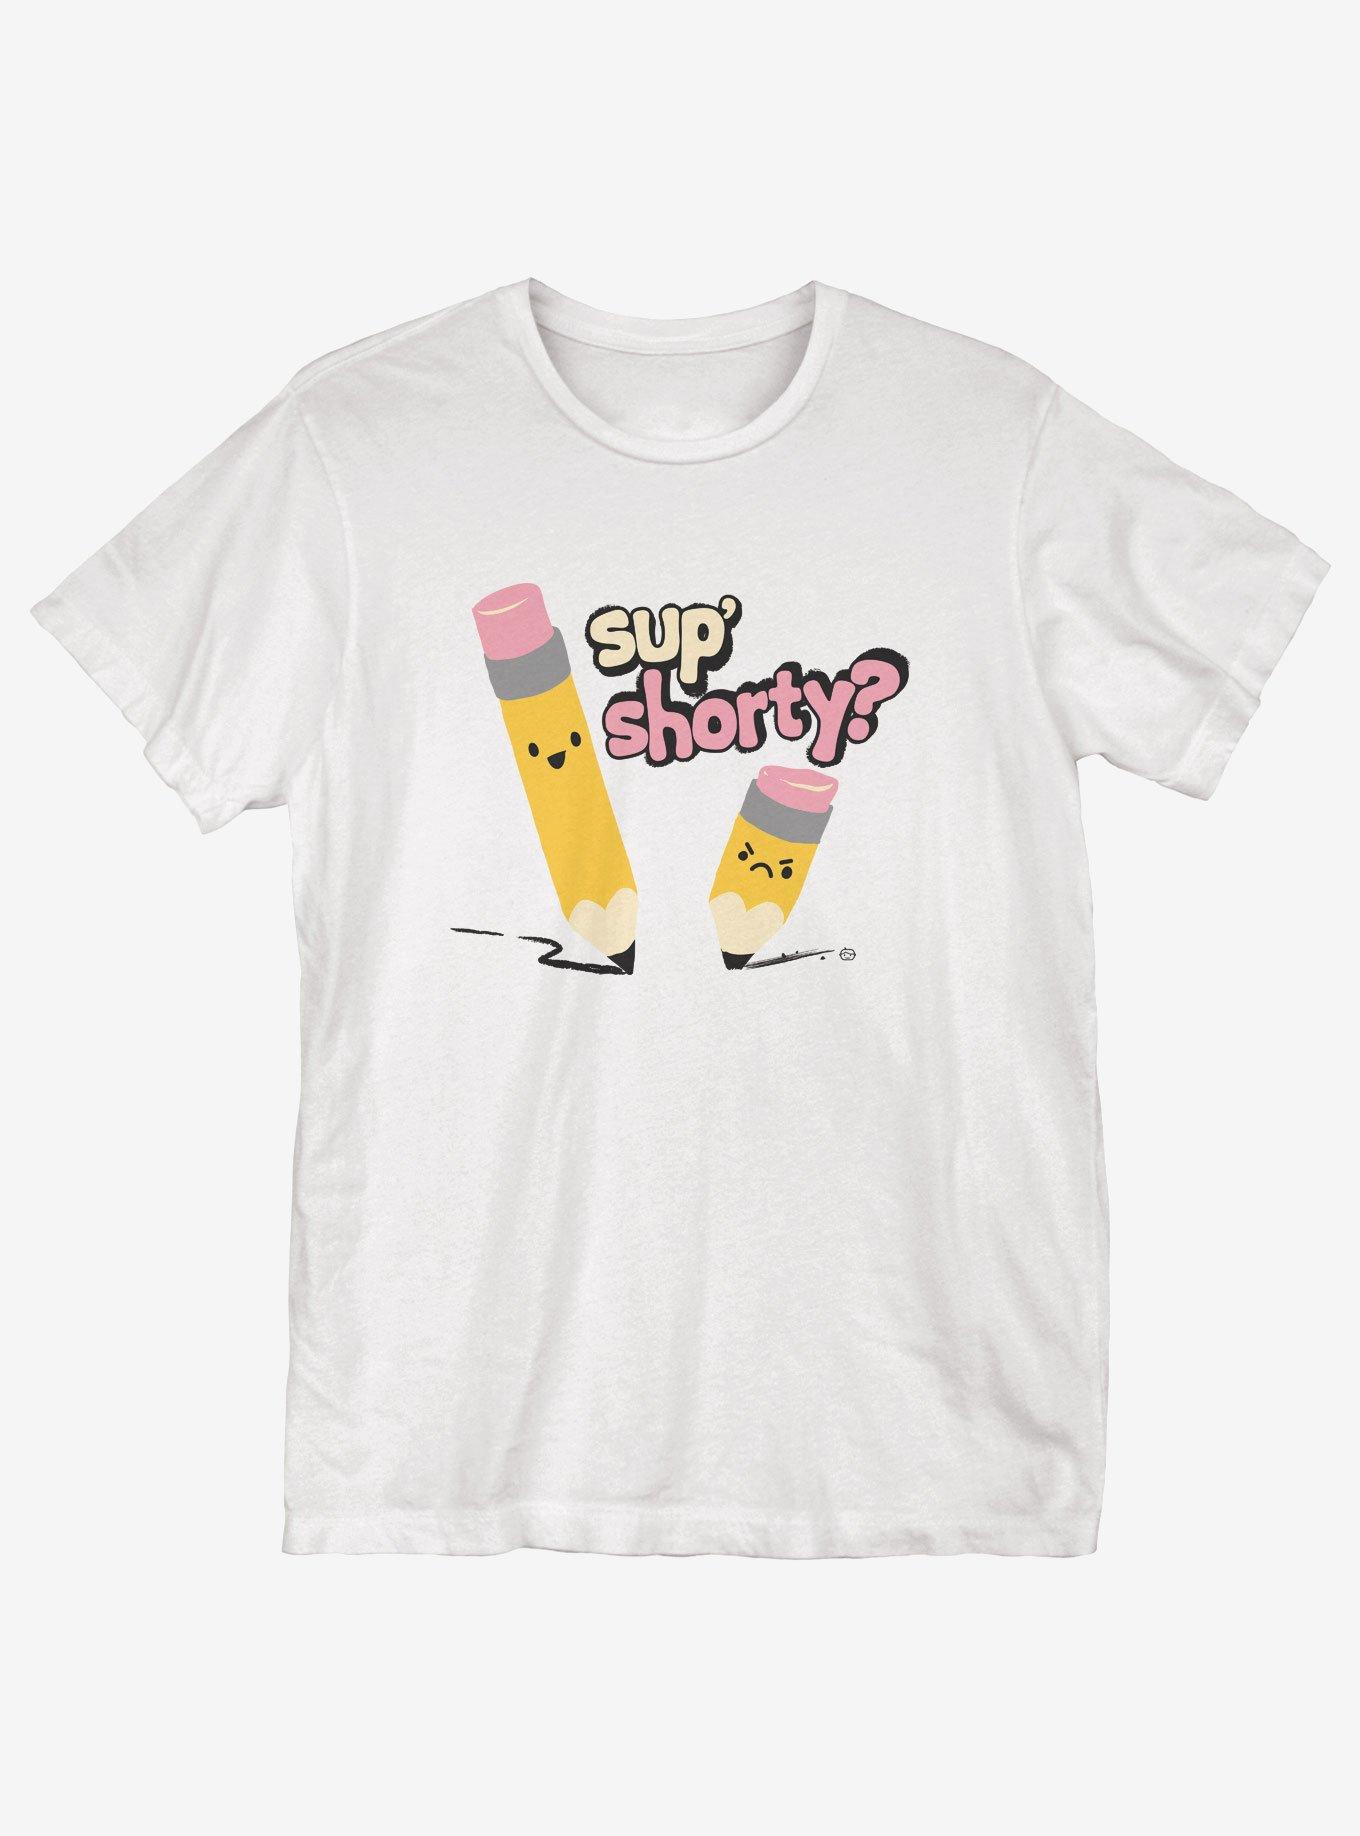 Sup Shorty T-Shirt - WHITE | Hot Topic